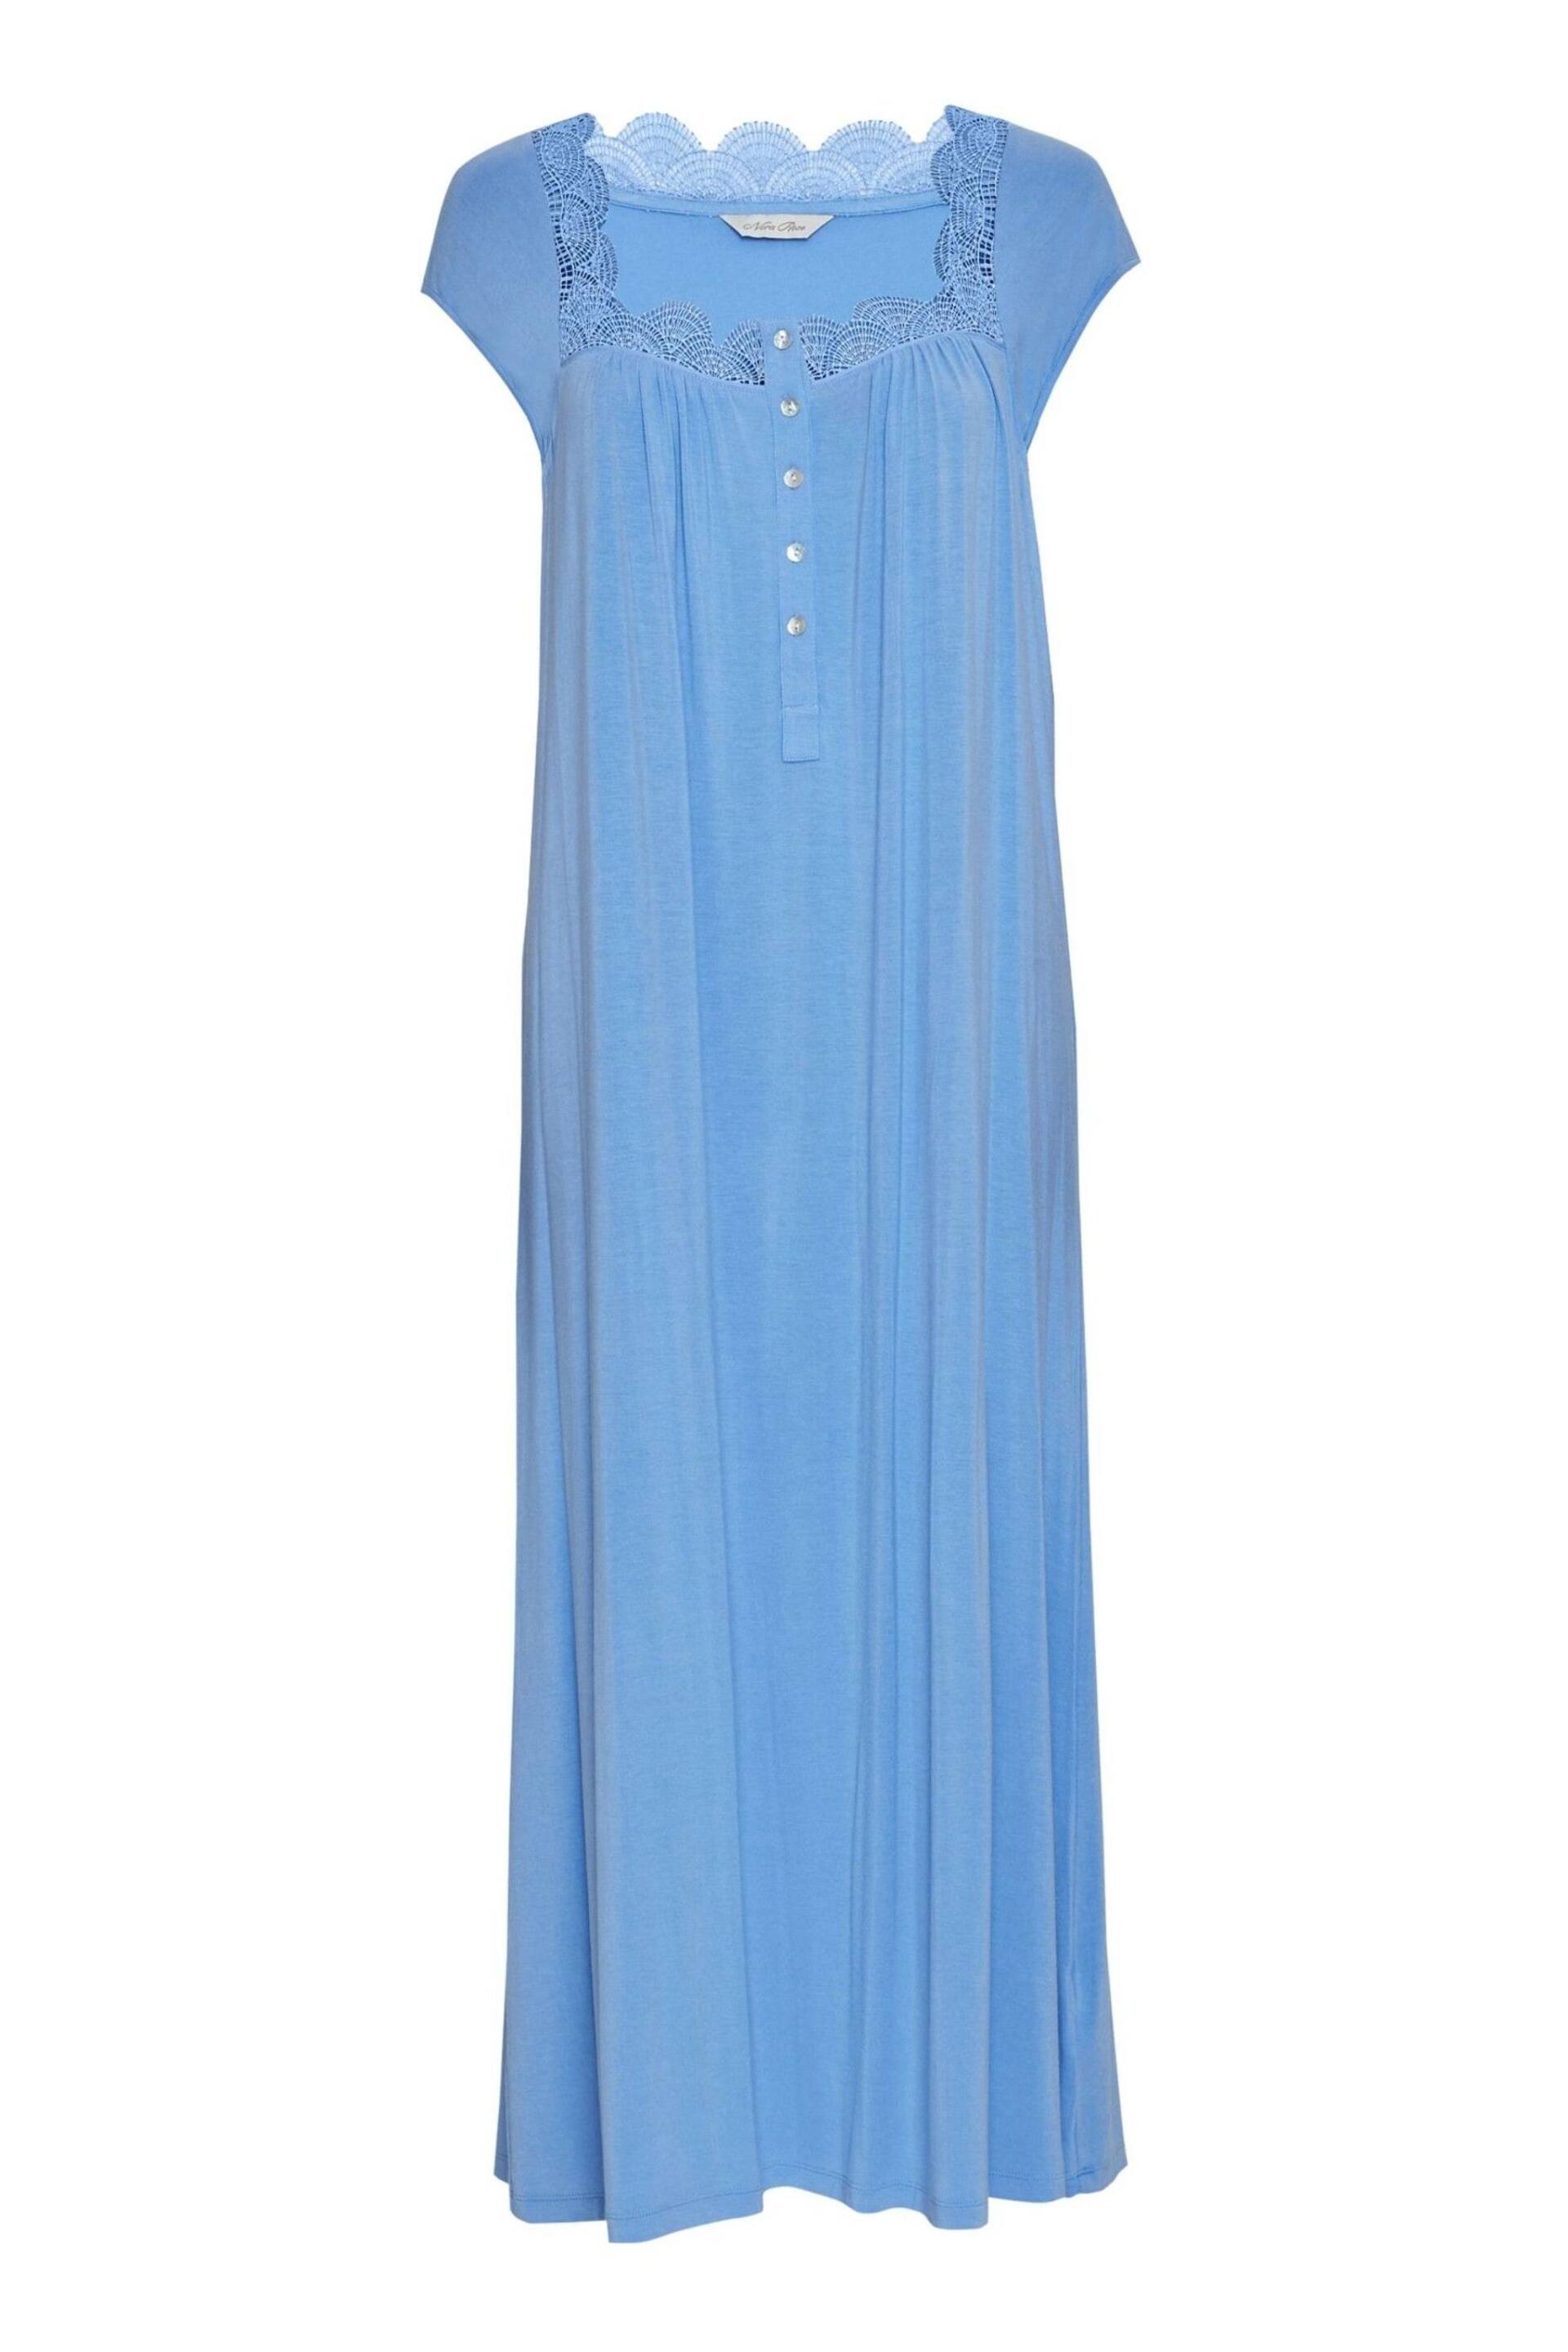 Nora Rose Blue Jersey Long Nightdress - Image 4 of 4